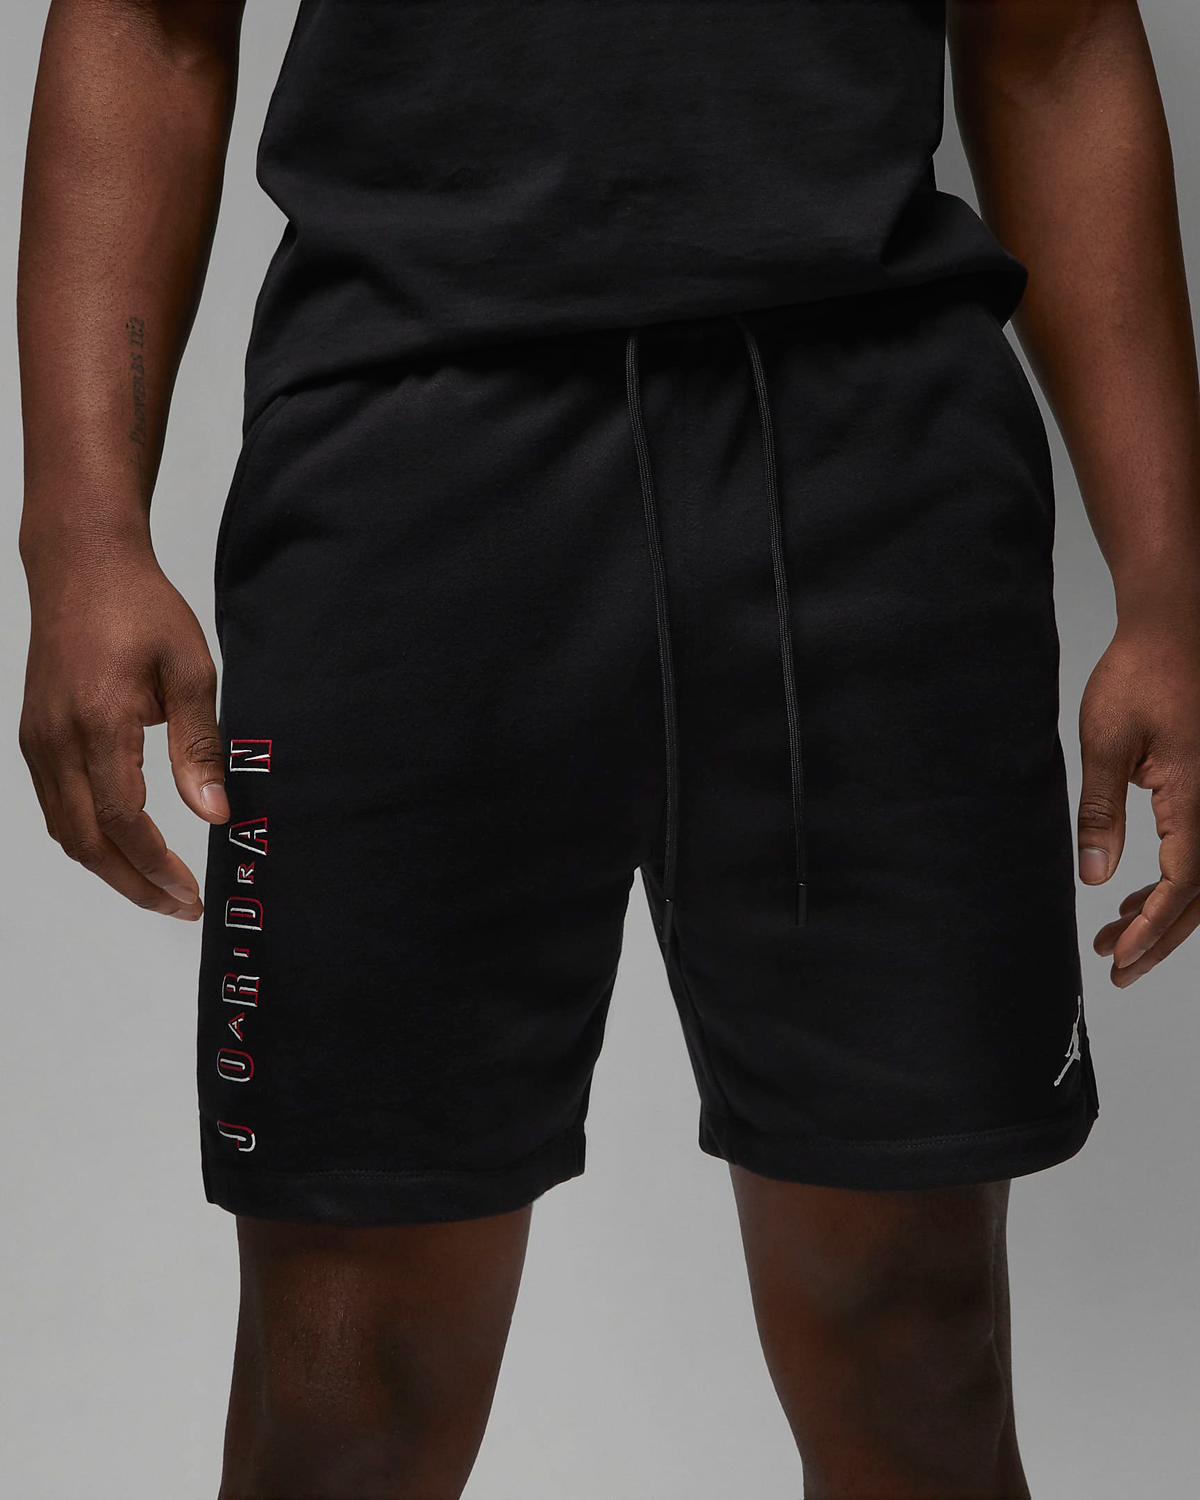 Jordan-Essentials-Shorts-Black-White-Red-3